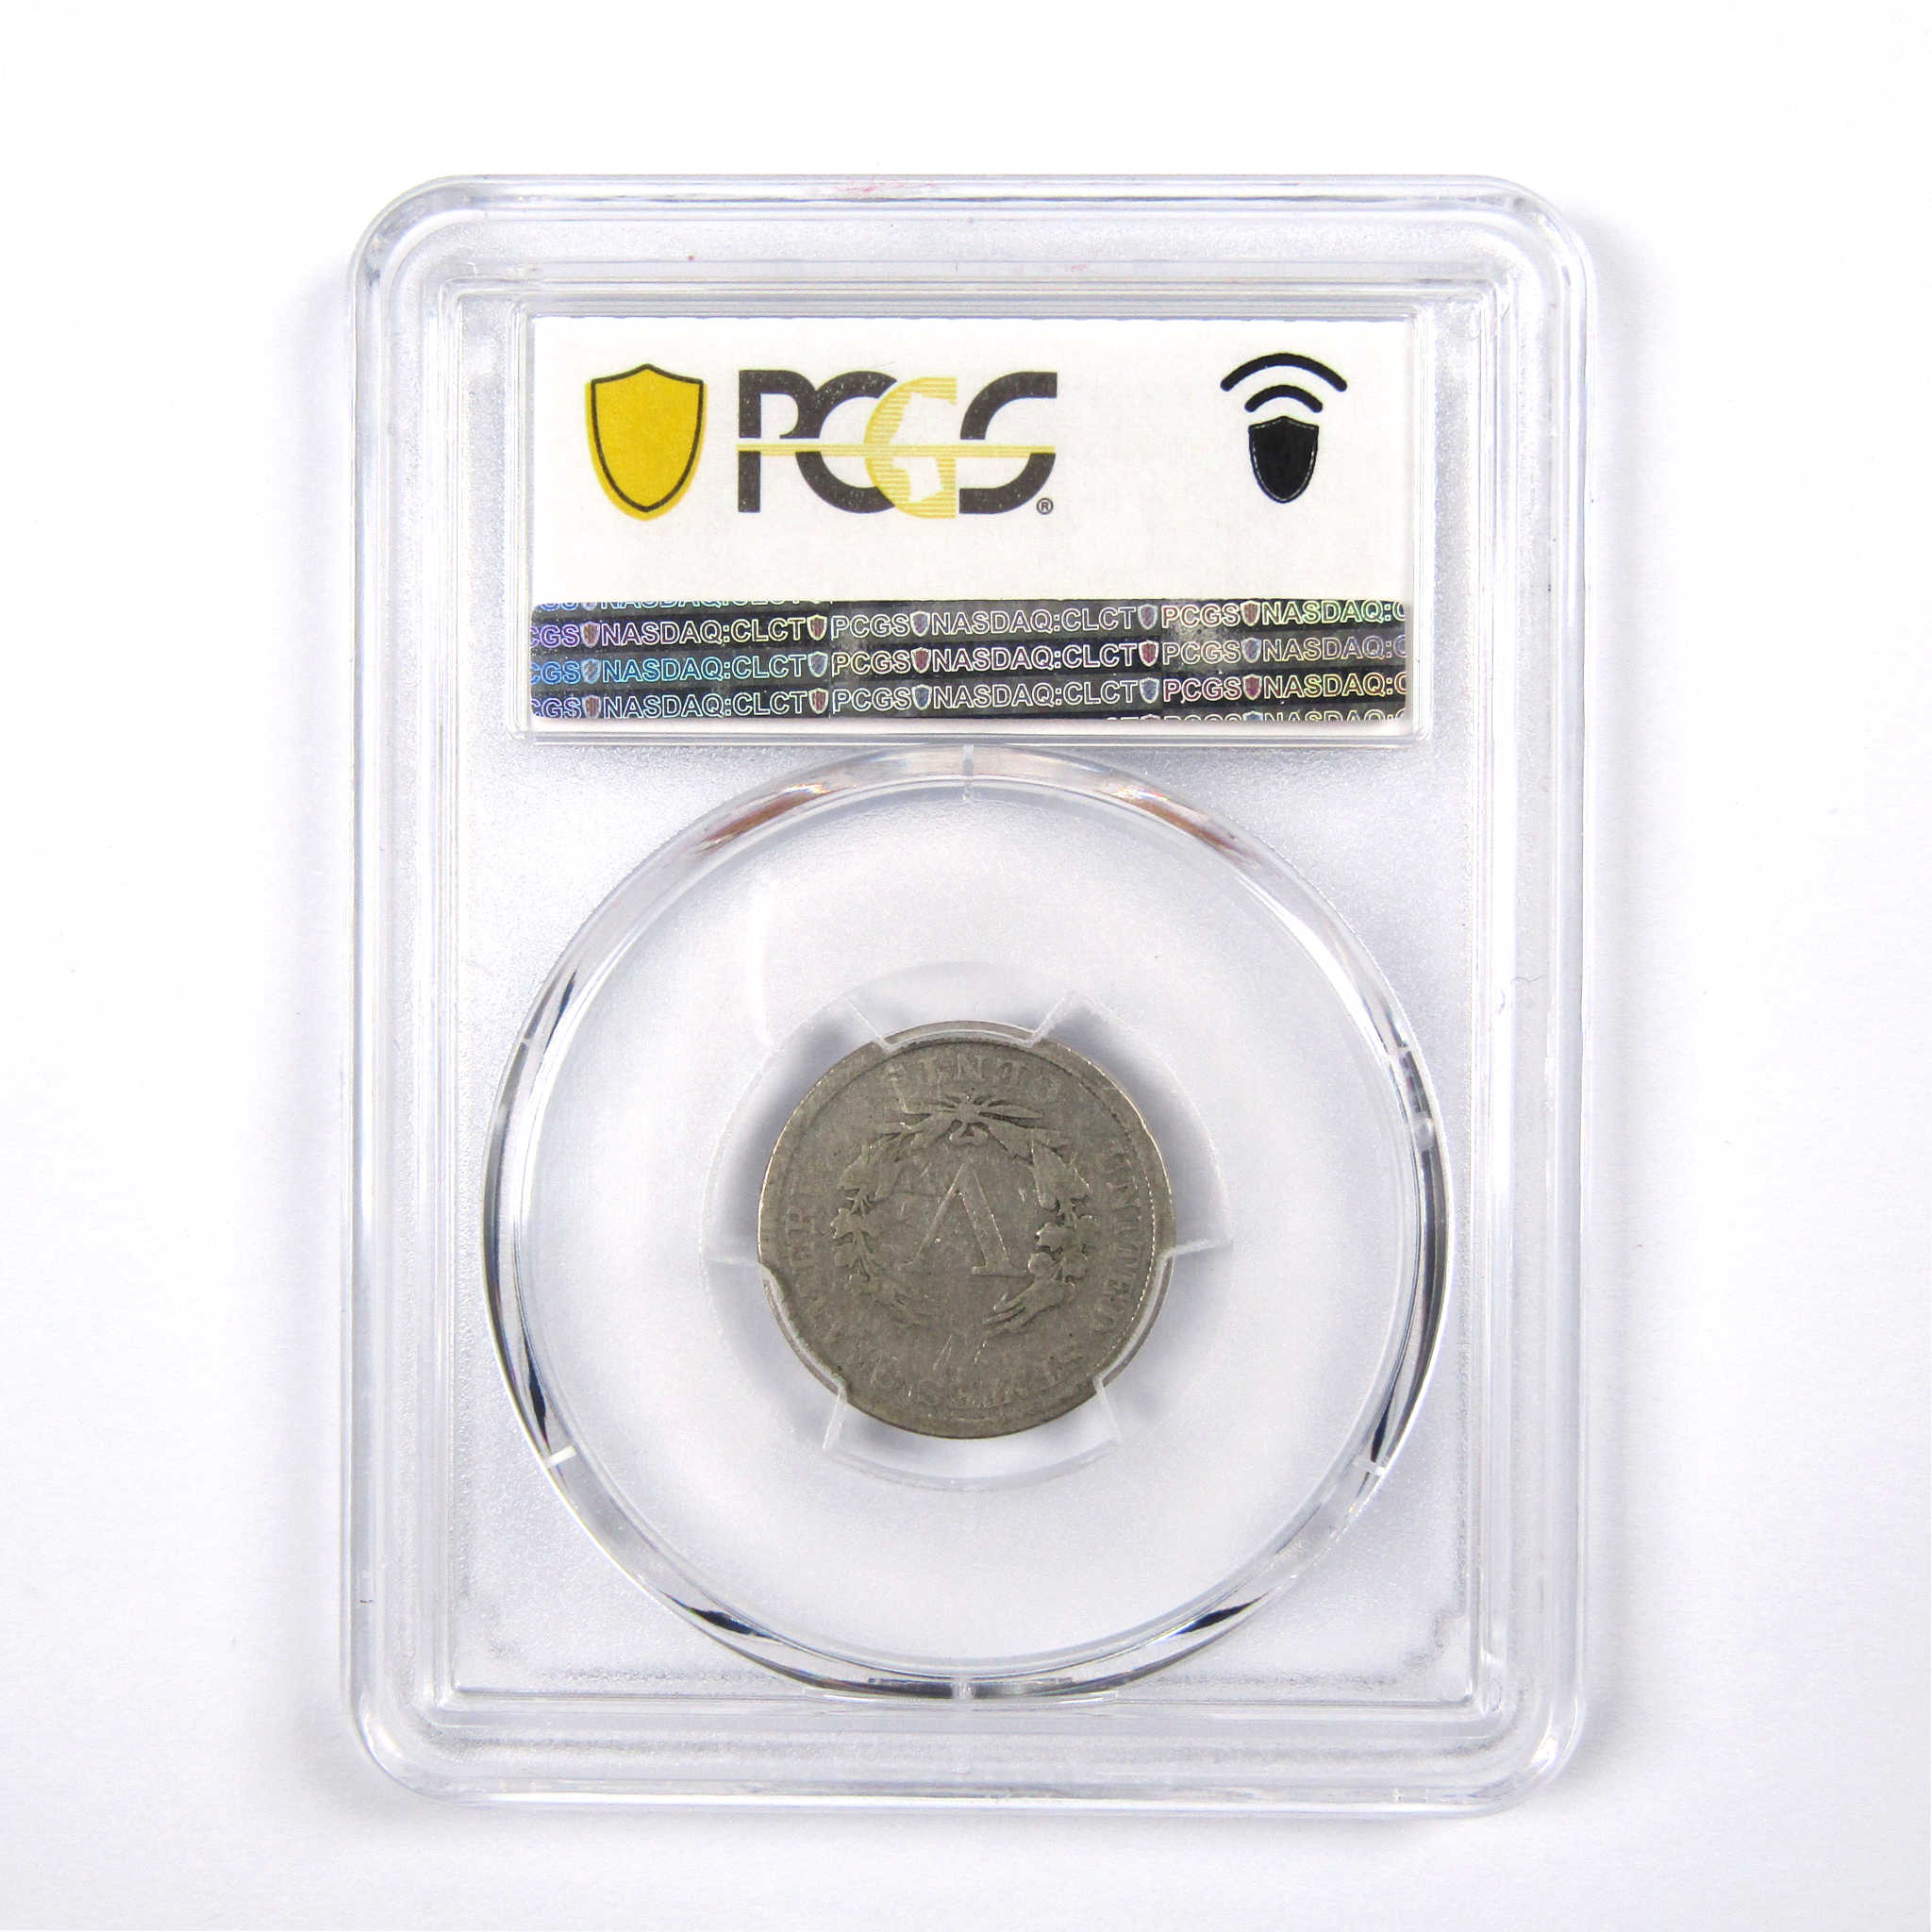 1886 Liberty Head V Nickel G 4 PCGS 5c Coin SKU:I7410